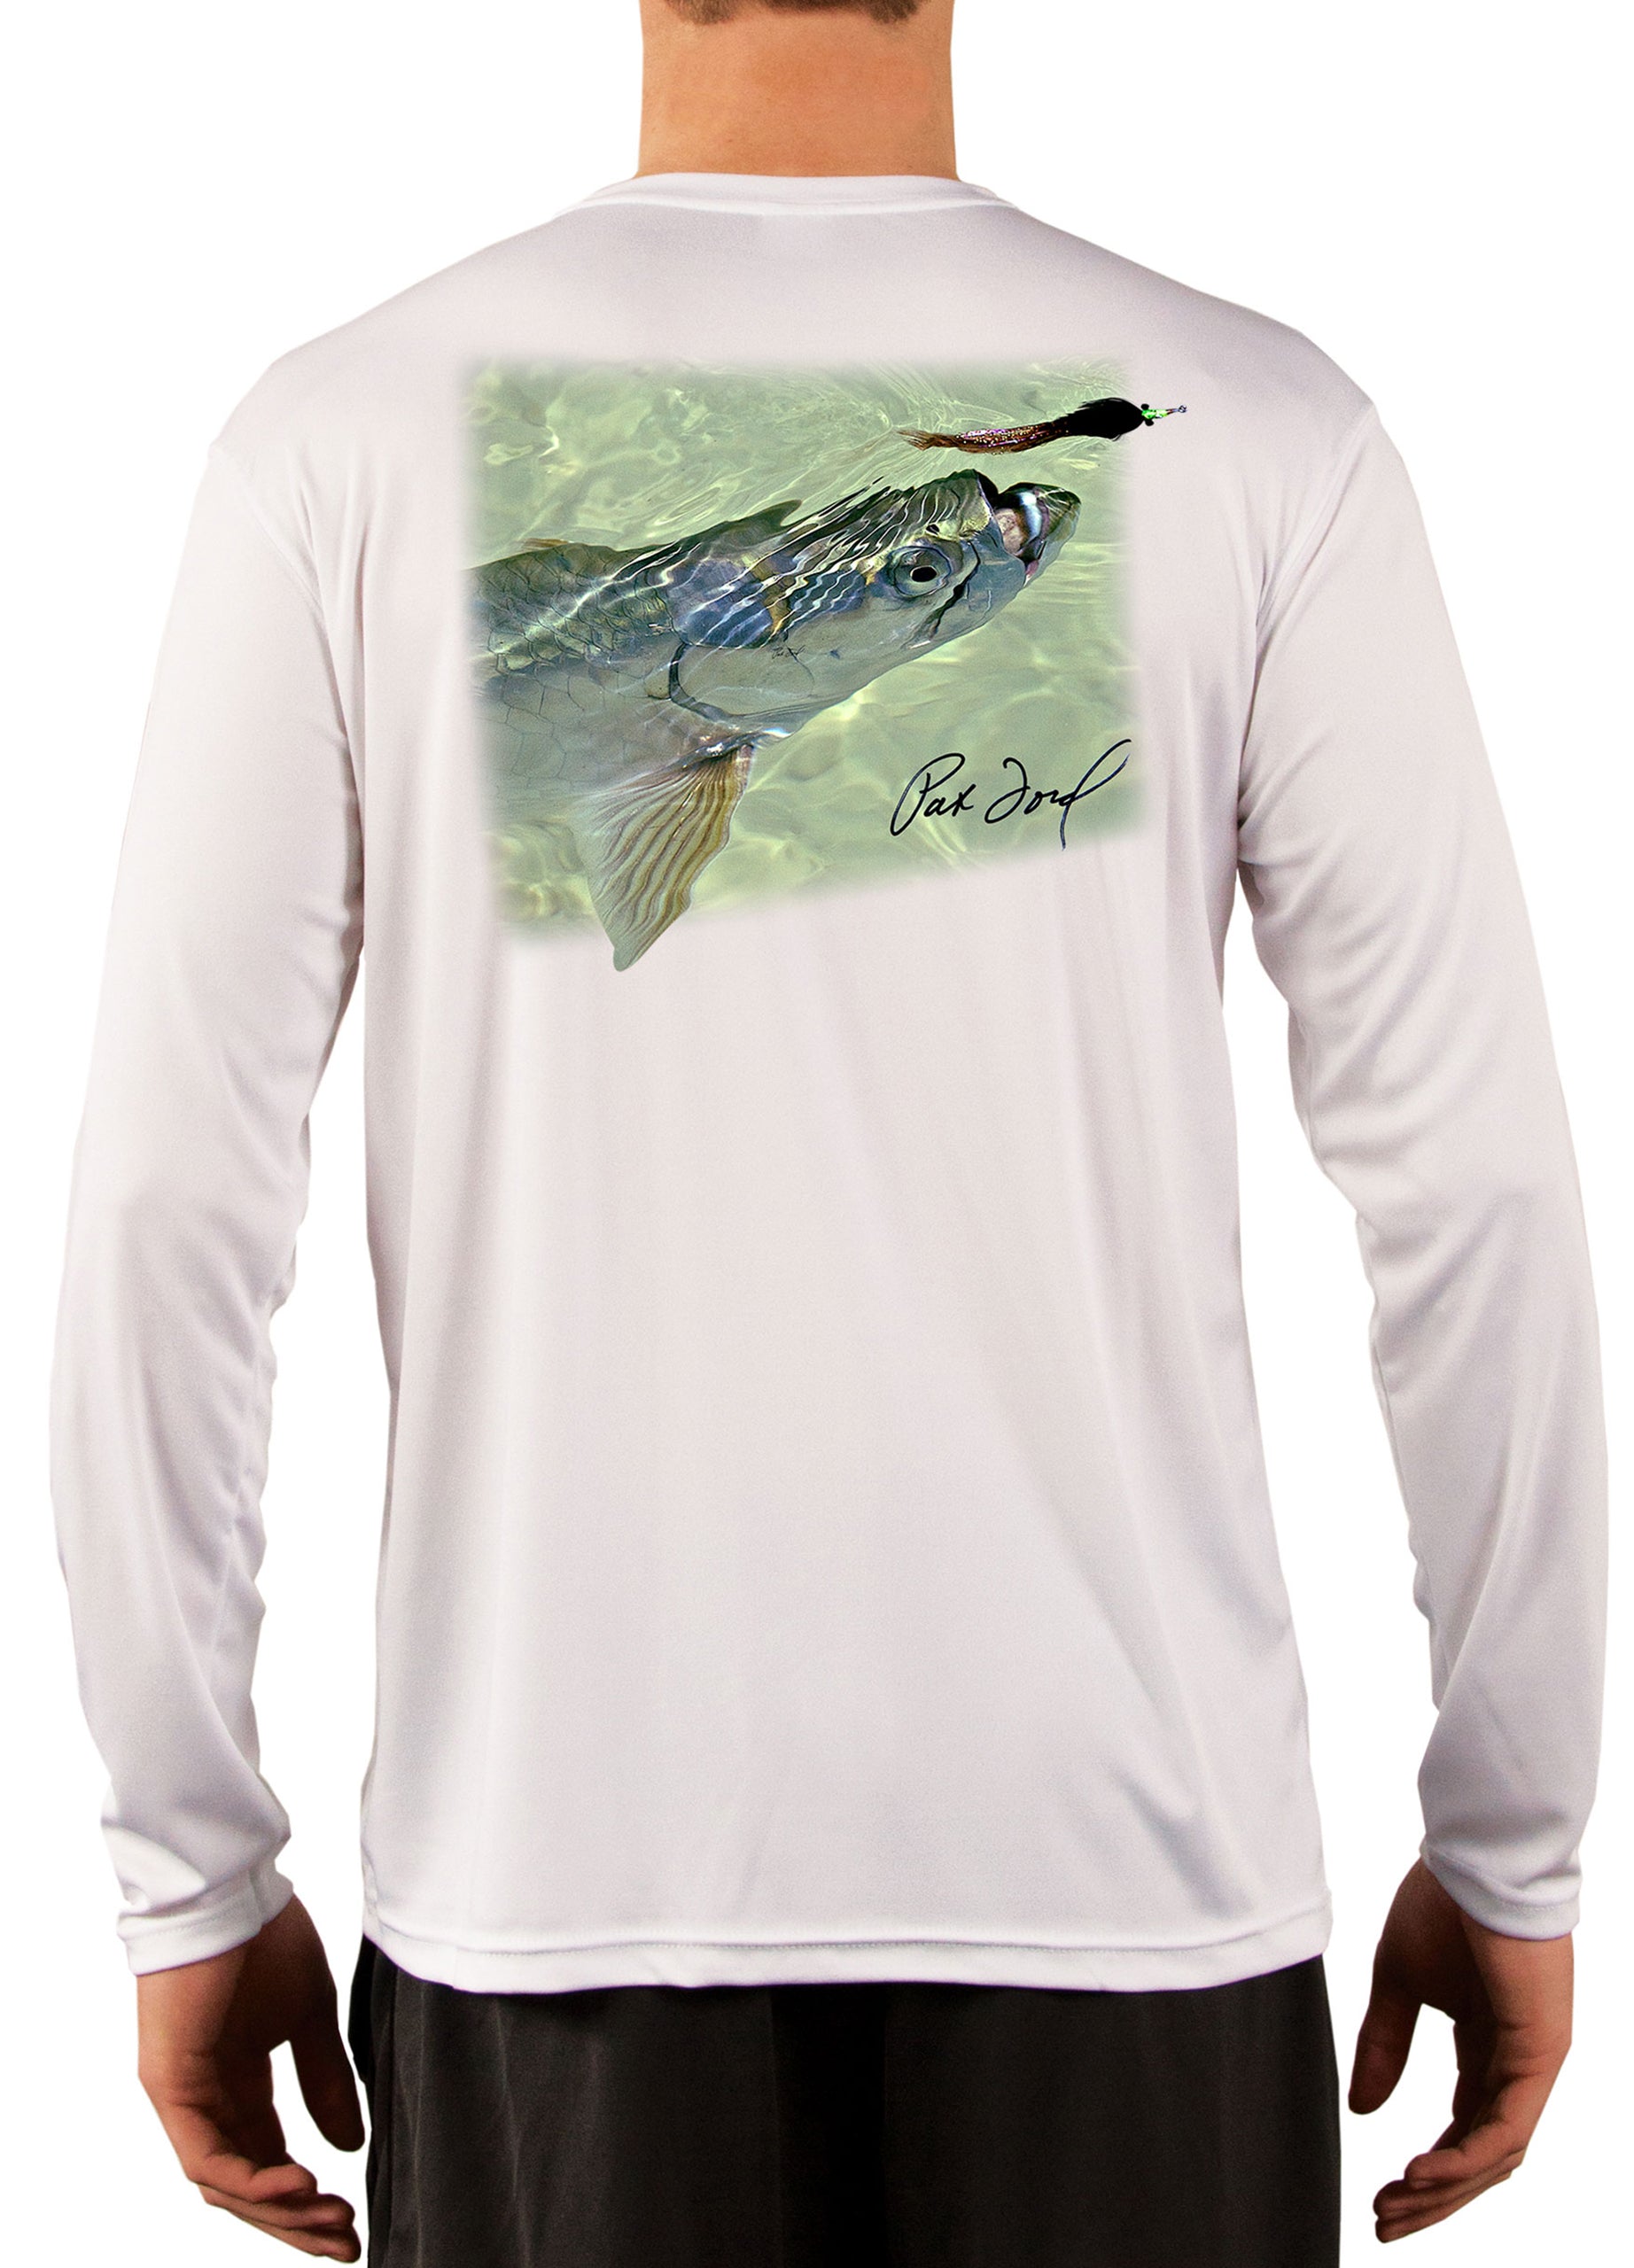 Tarpon Fly Fishing Shirt for Men by Pat Ford X-Large / White